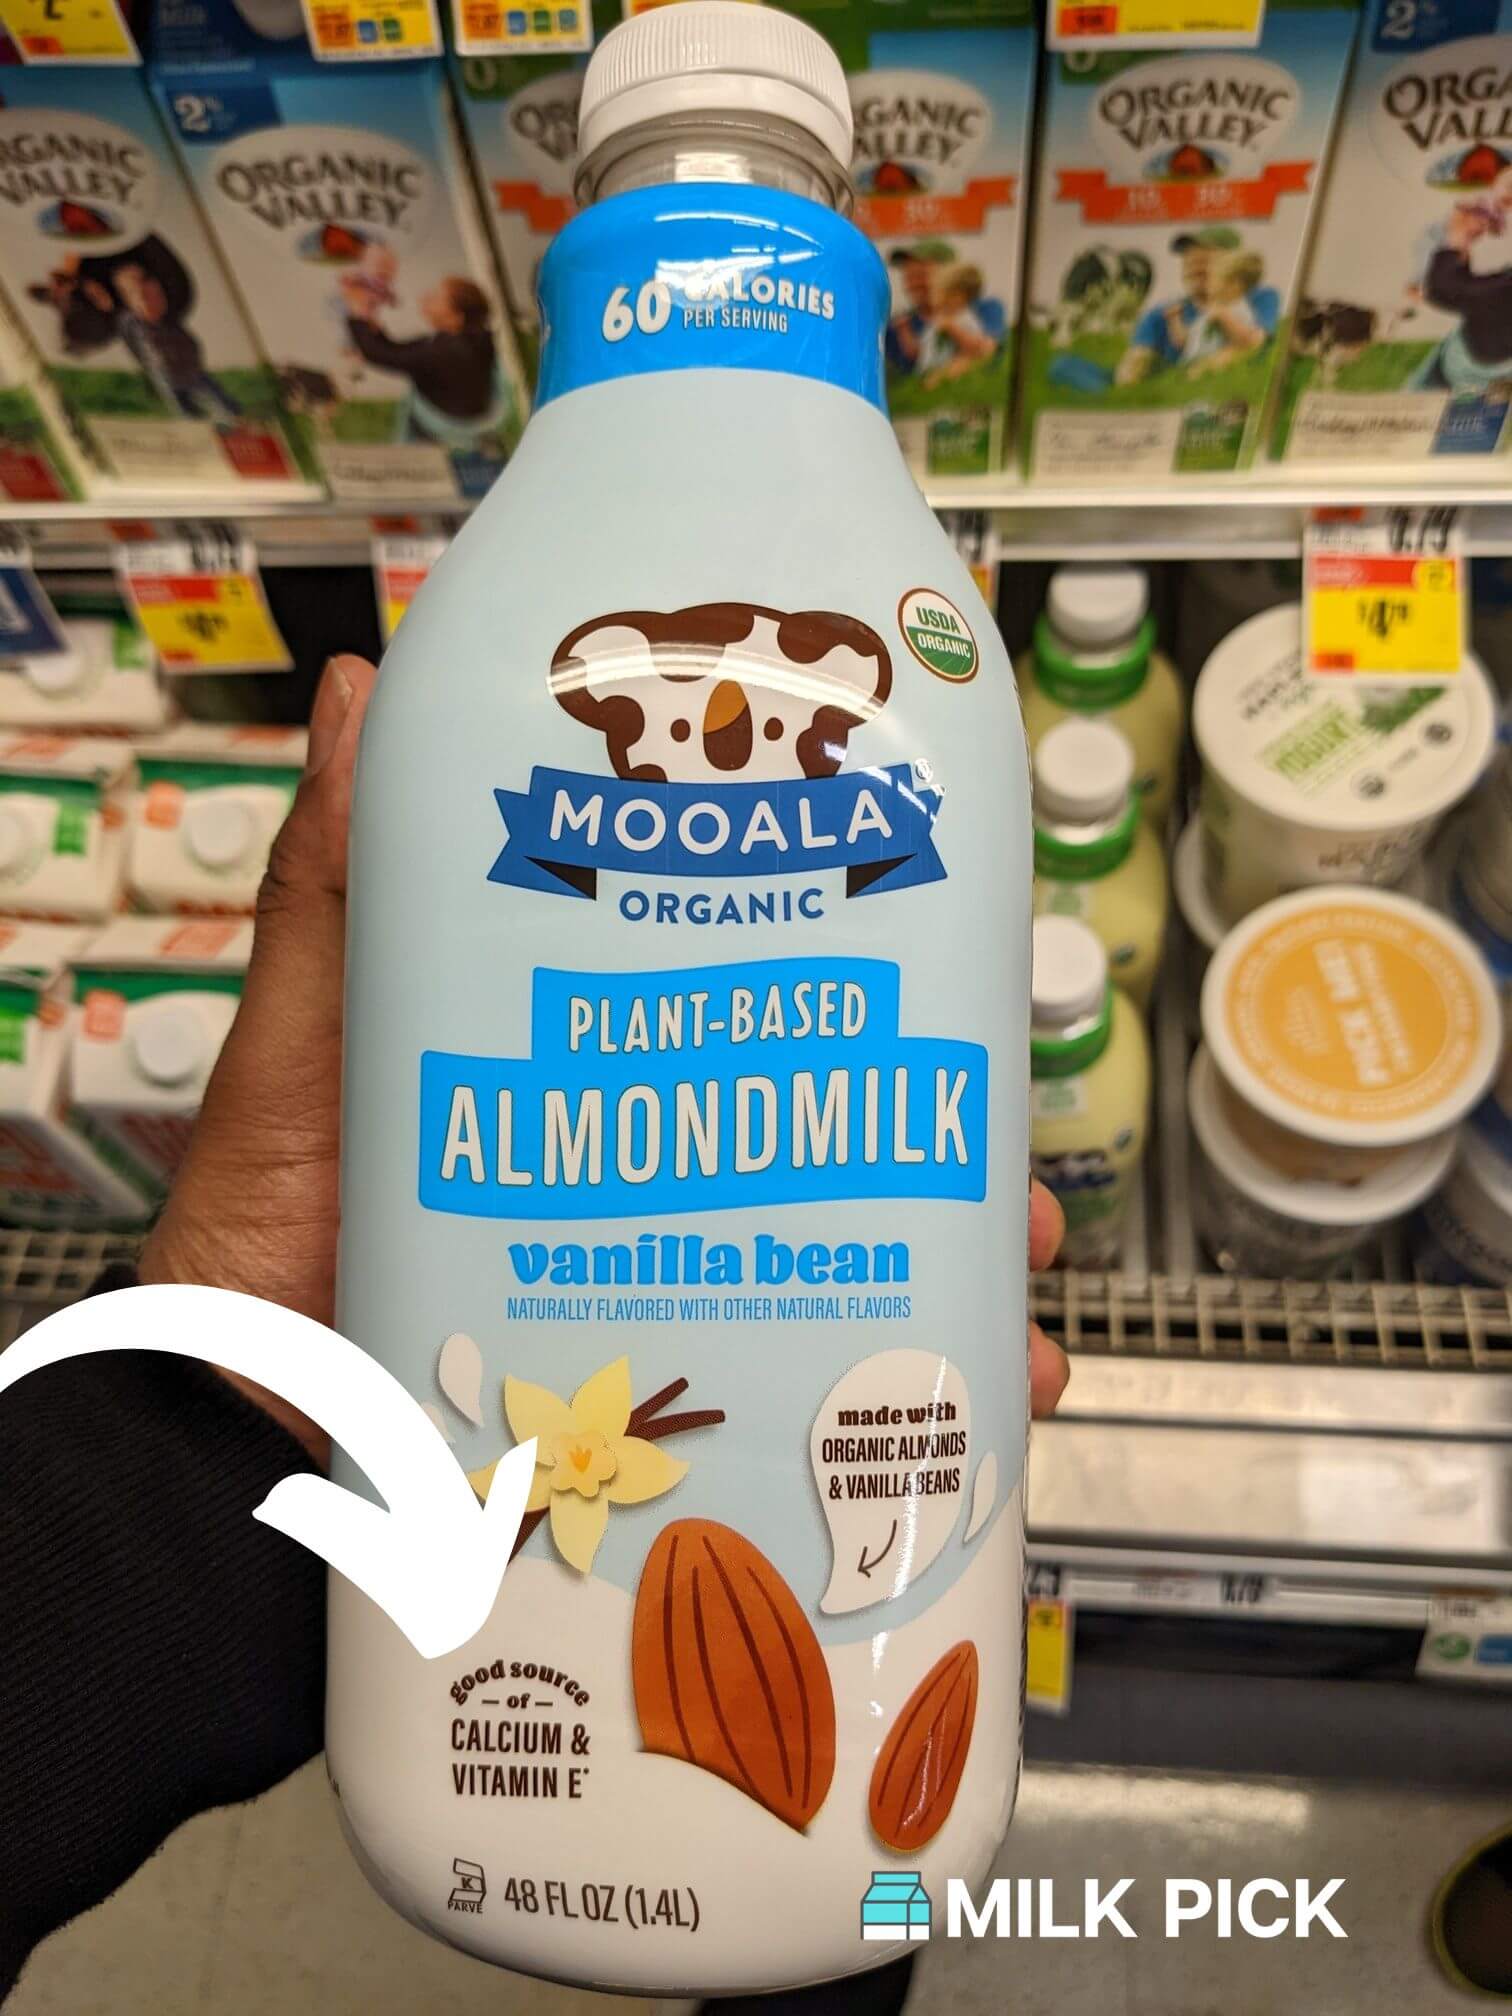 mooala vanilla almond milk with arrow pointing to calcium and vitamin e